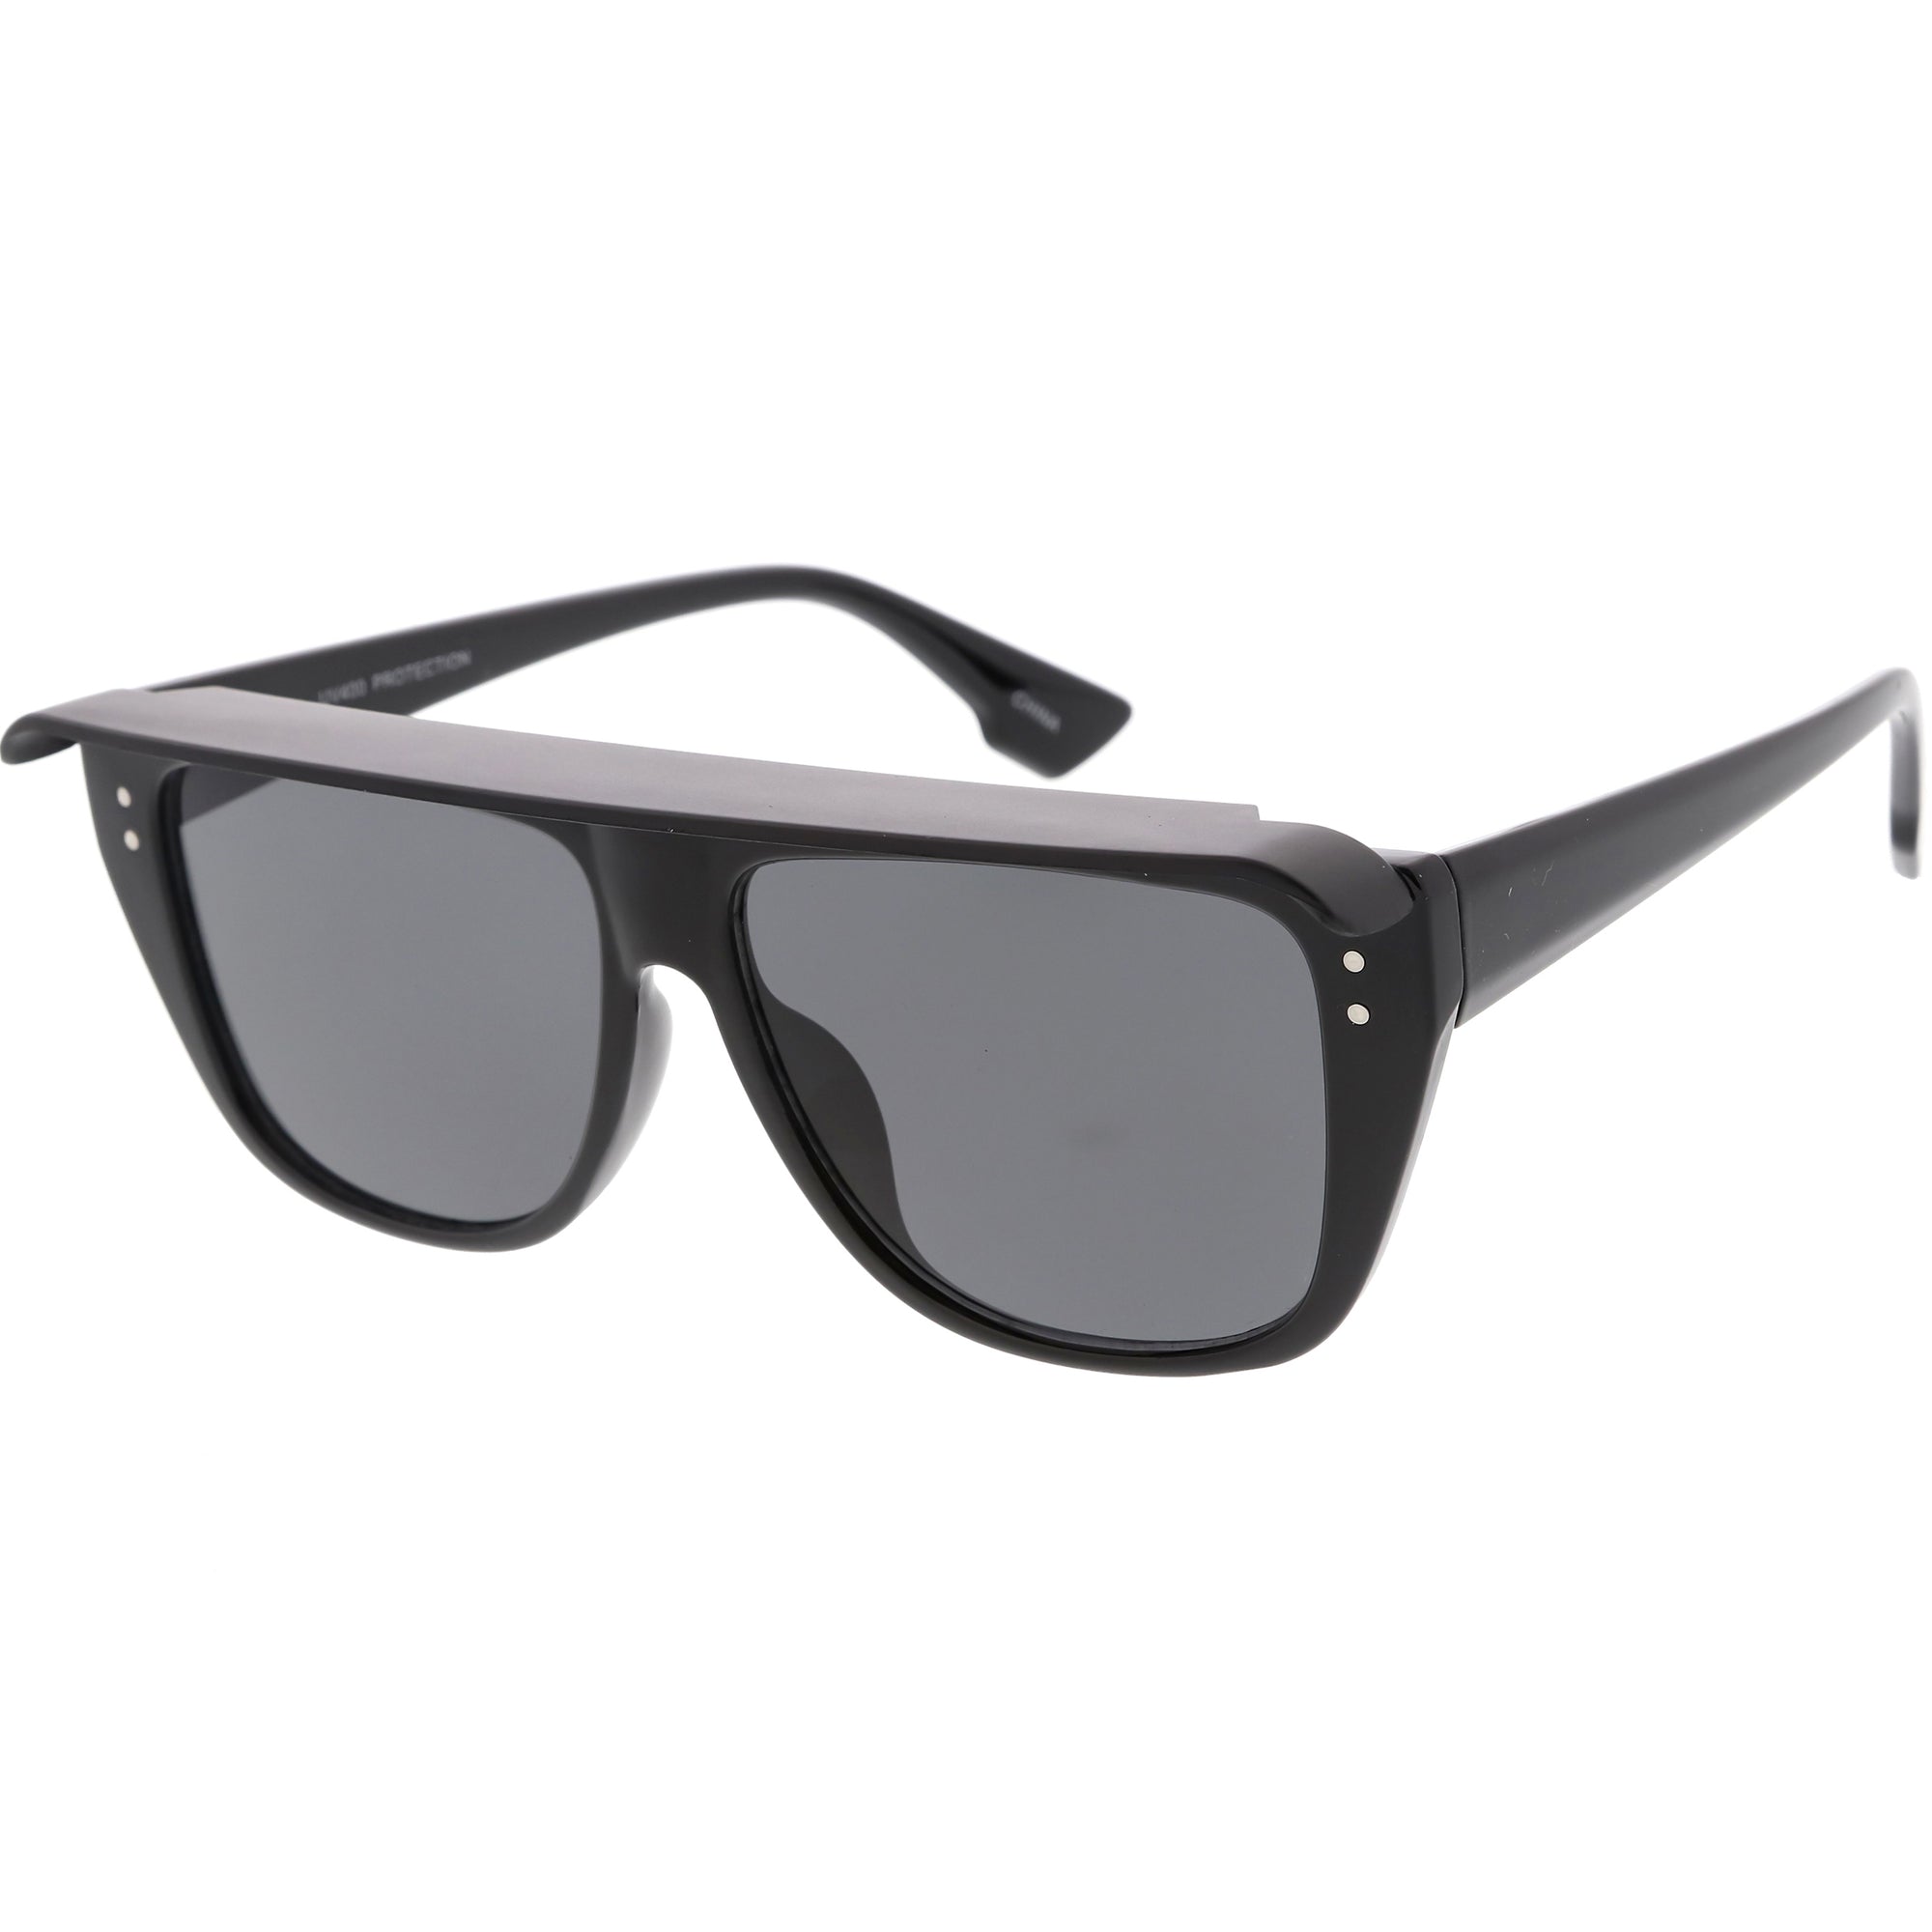 Olive Transparent Frame Sporty Visor Sunglasses